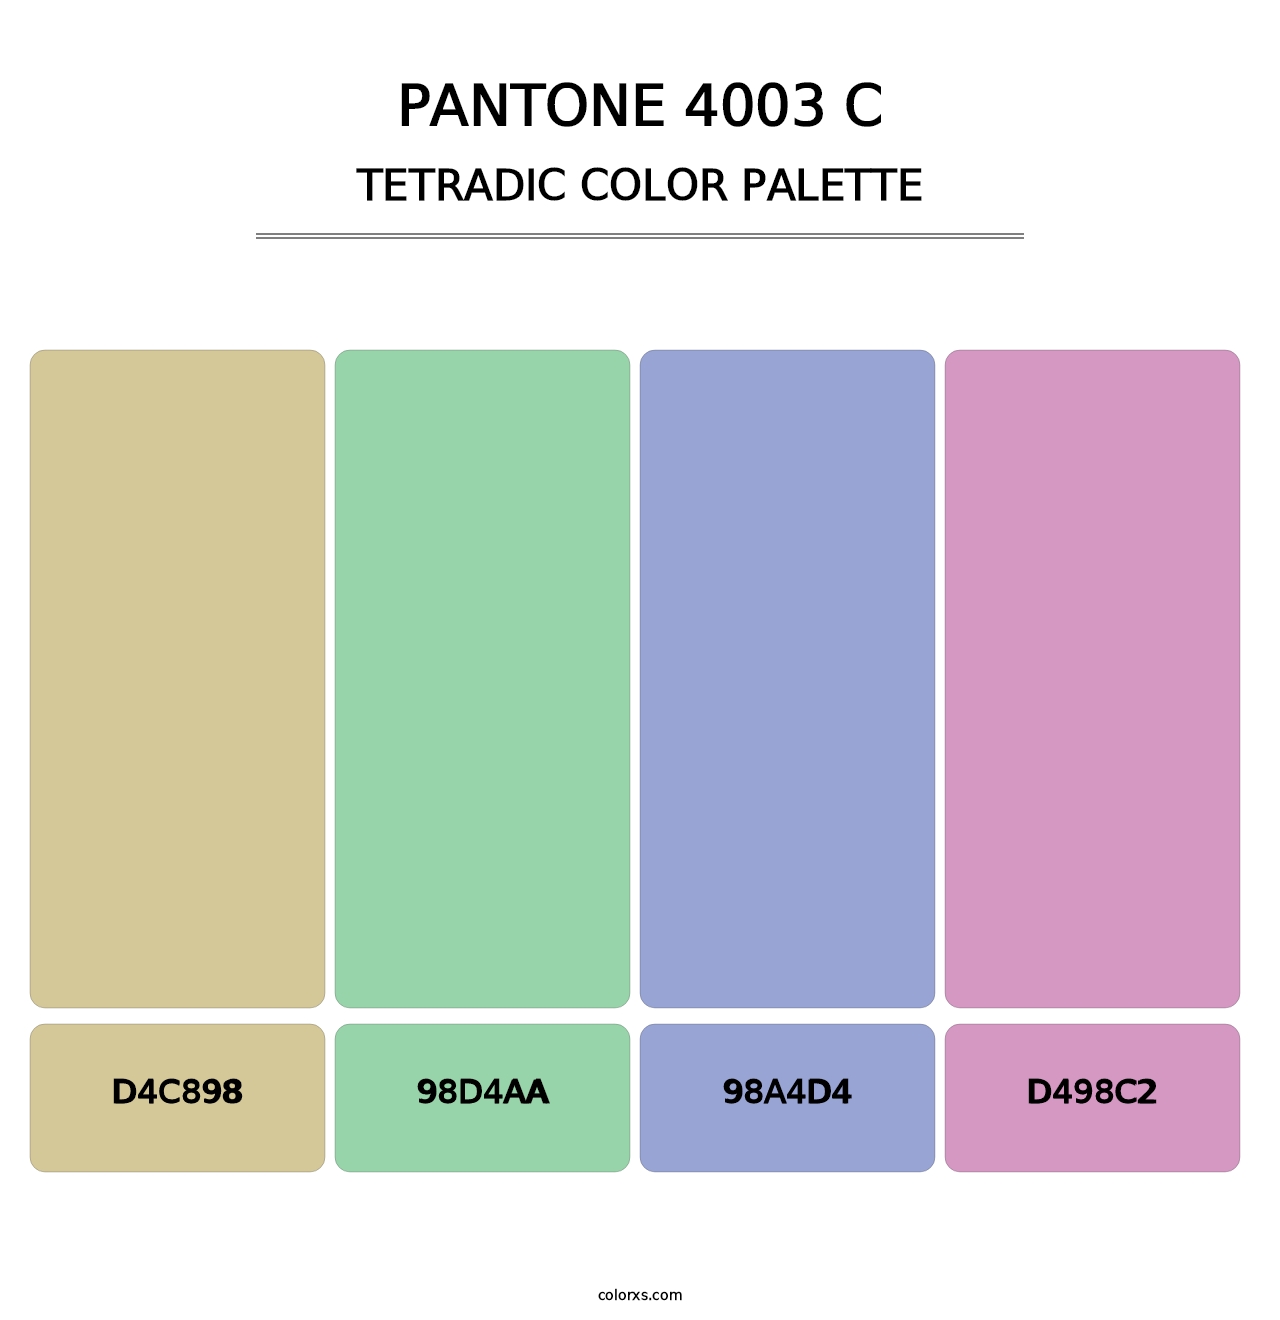 PANTONE 4003 C - Tetradic Color Palette